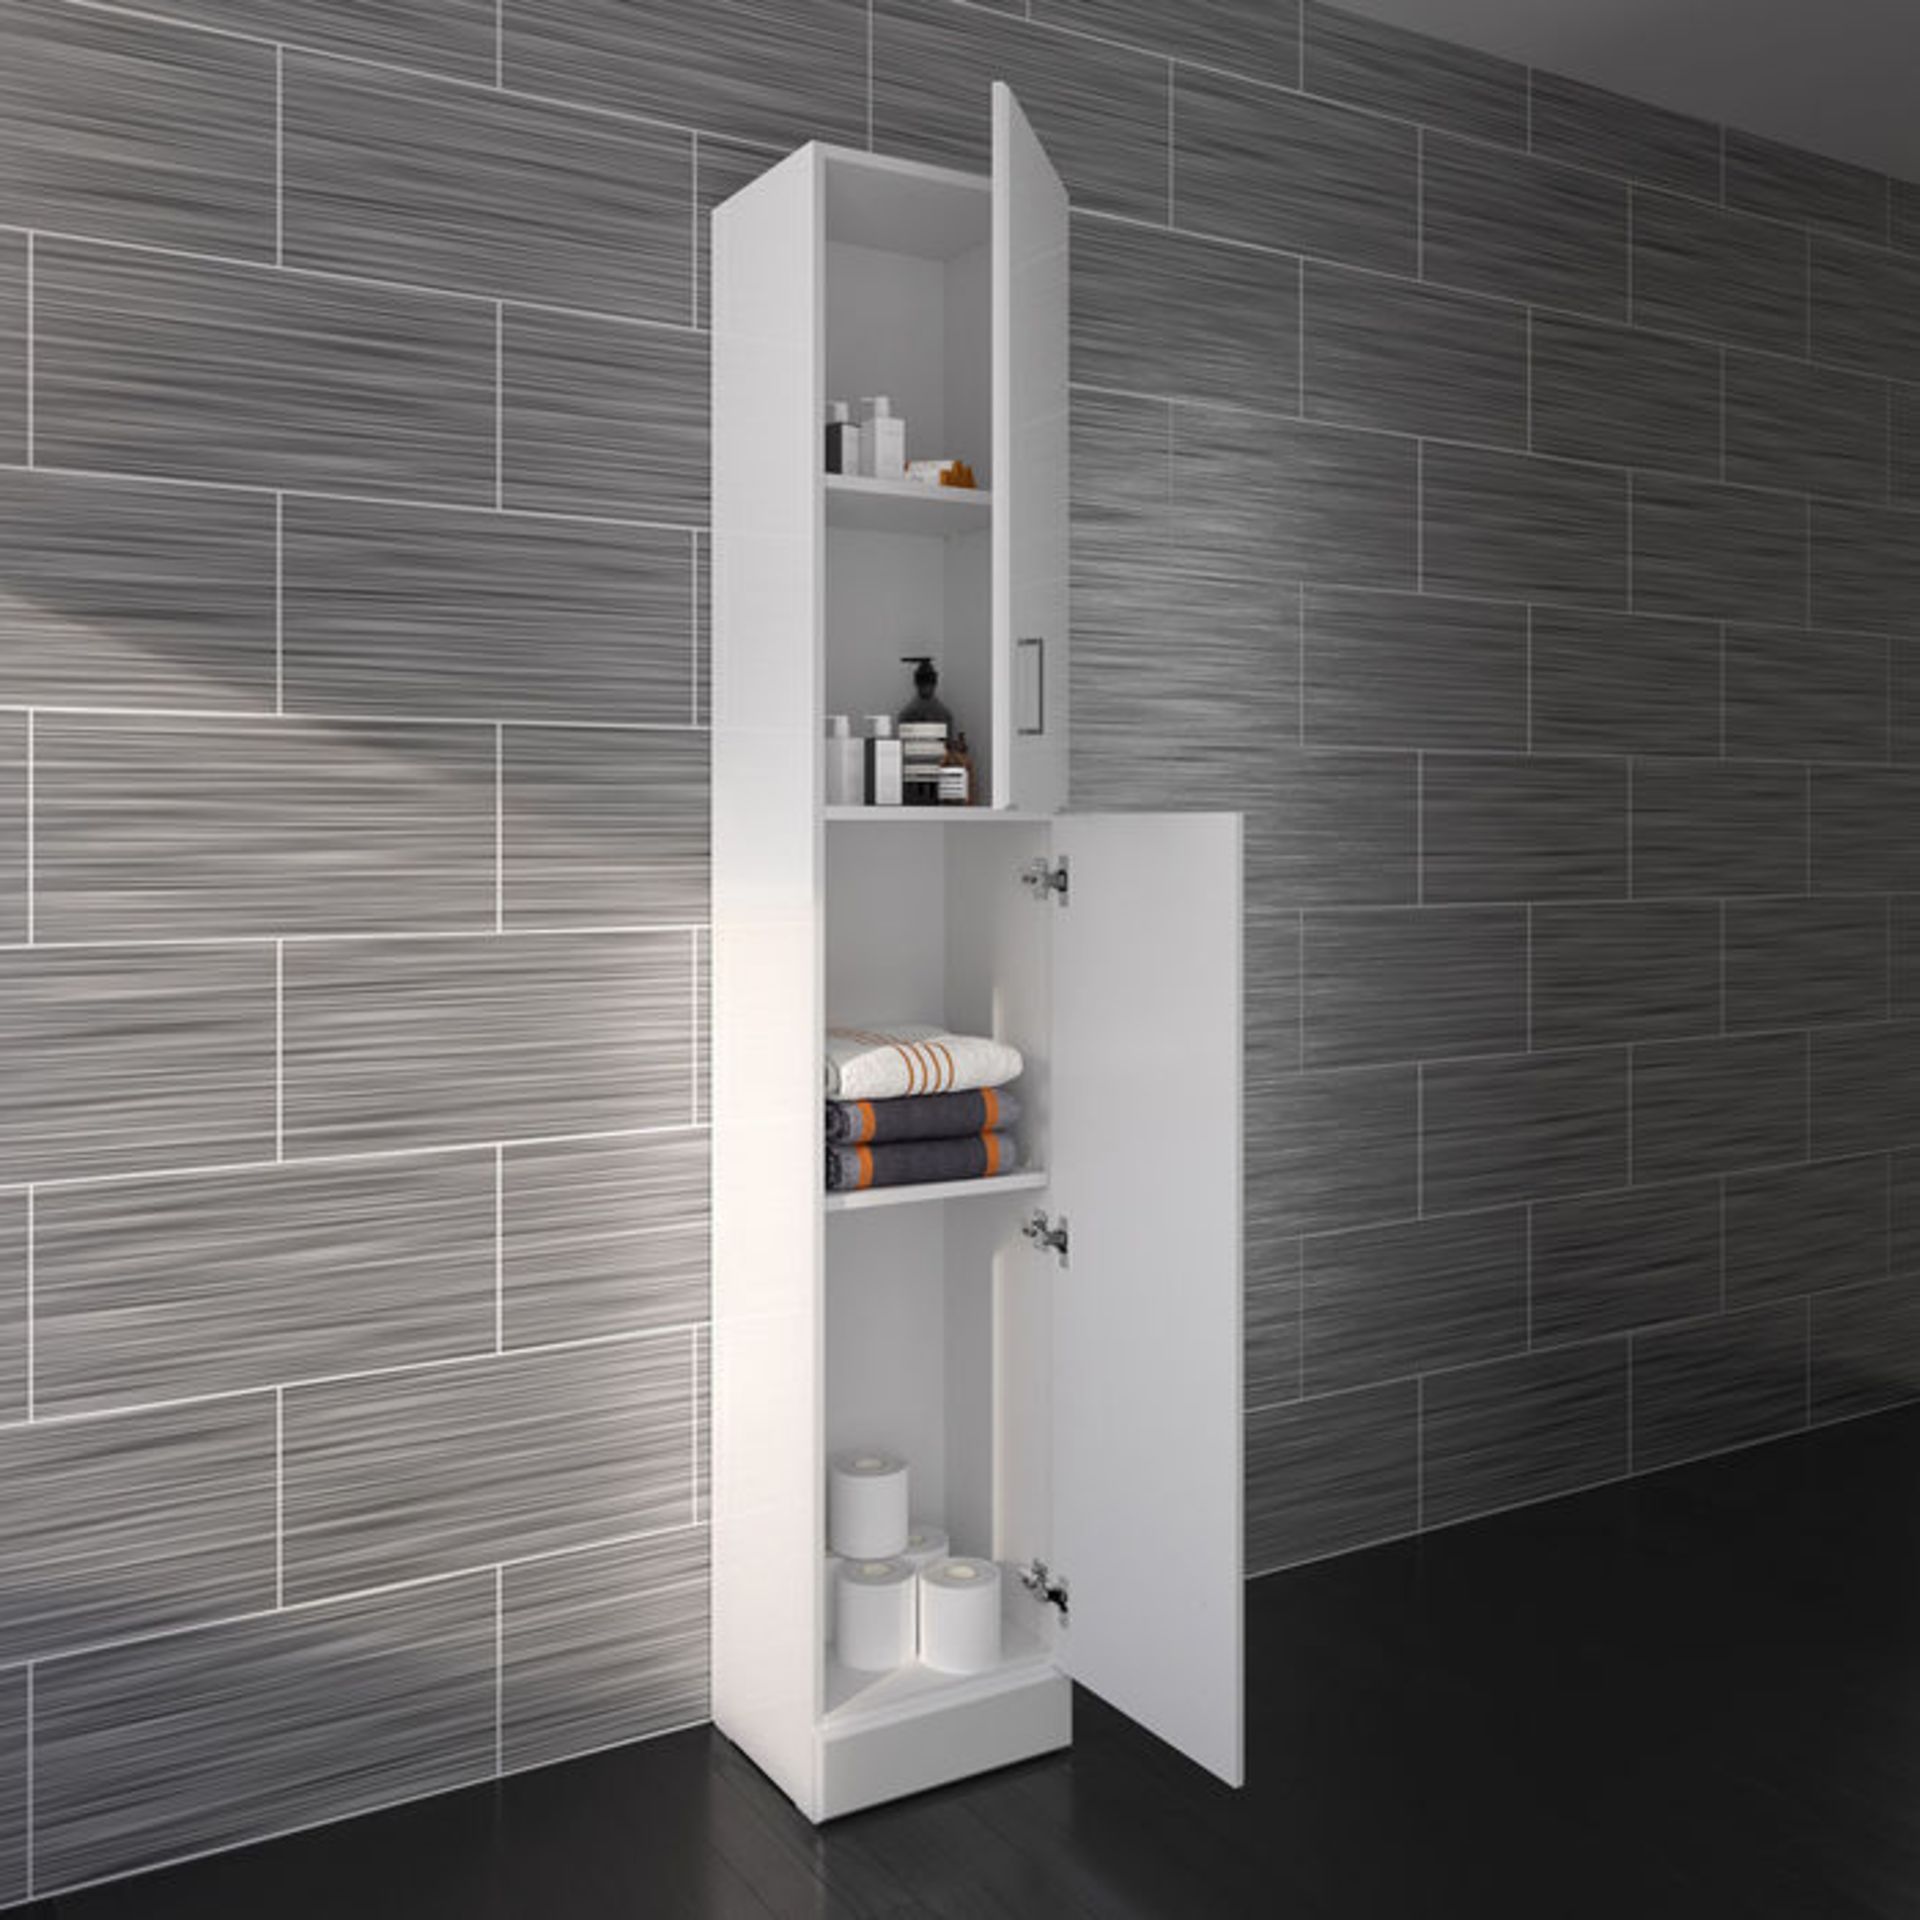 (L103) 1900x300mm Quartz Gloss White Tall Storage Cabinet - Floor Standing. RRP £251.99. Pristine - Image 2 of 3